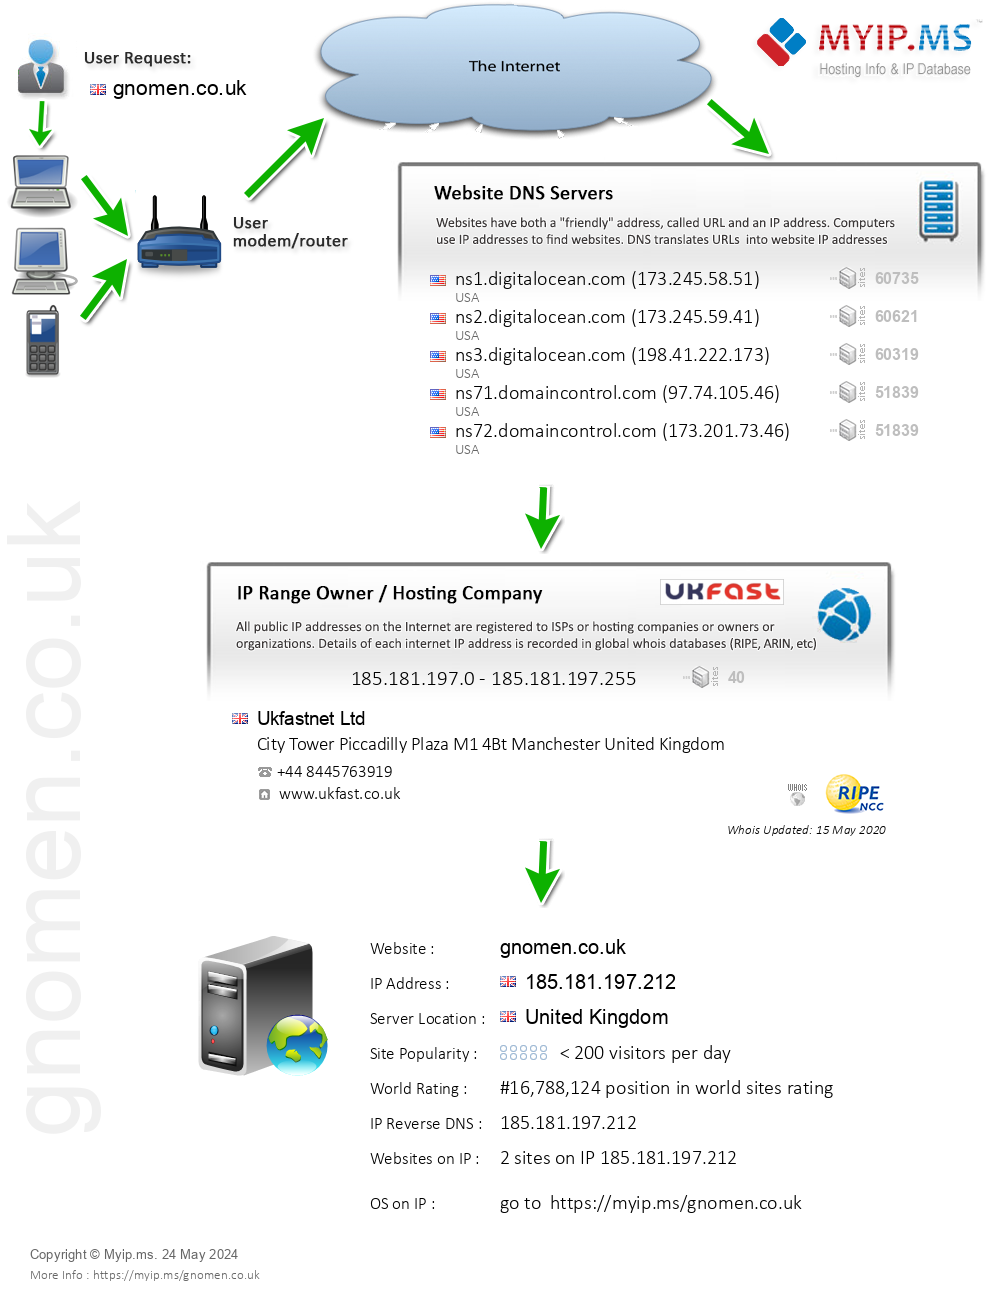 Gnomen.co.uk - Website Hosting Visual IP Diagram